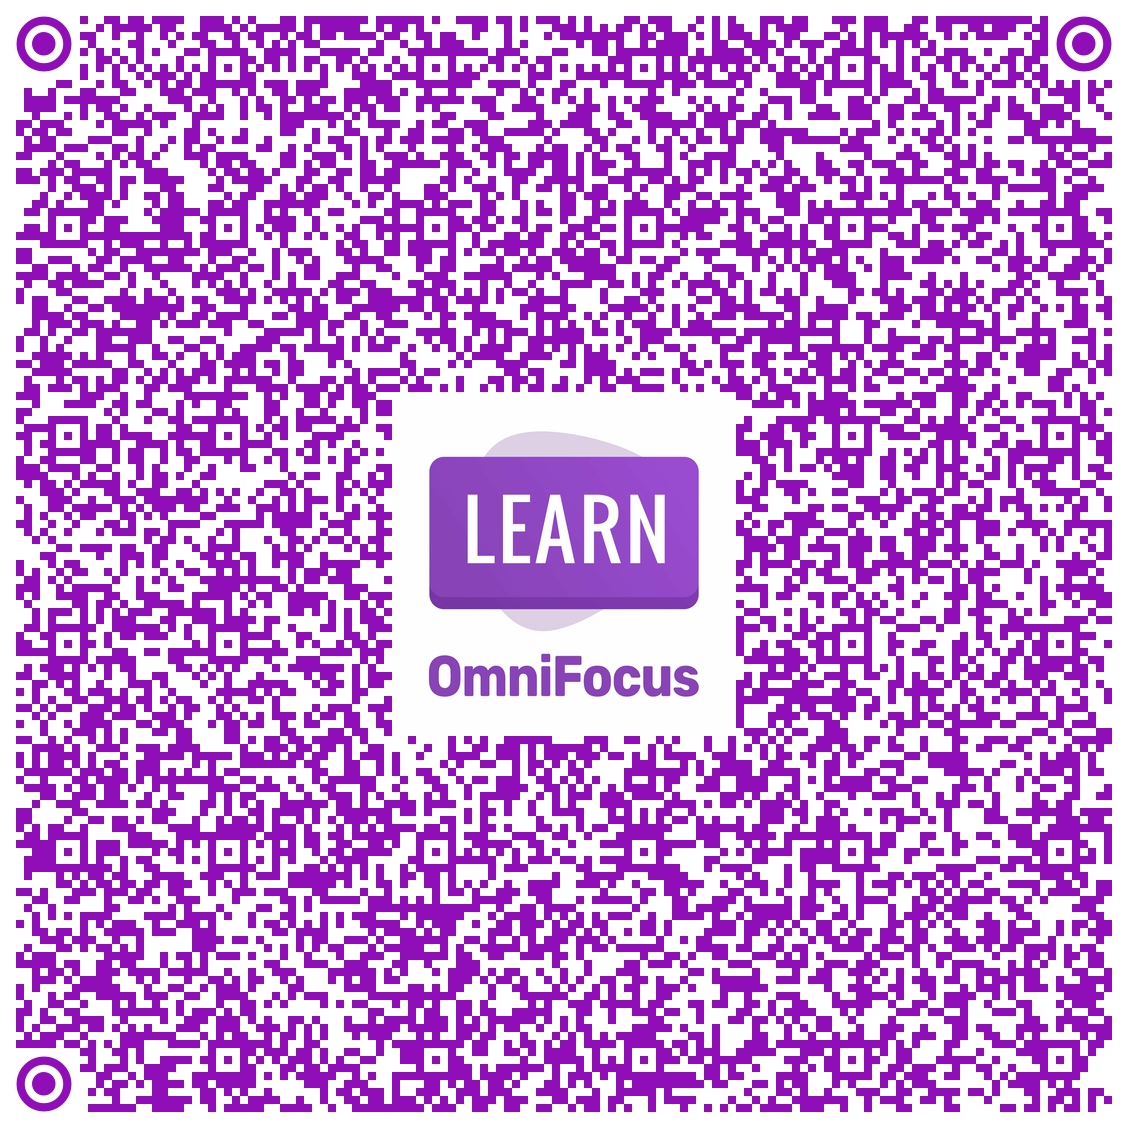 qr-code-learn-omnifocus-blog